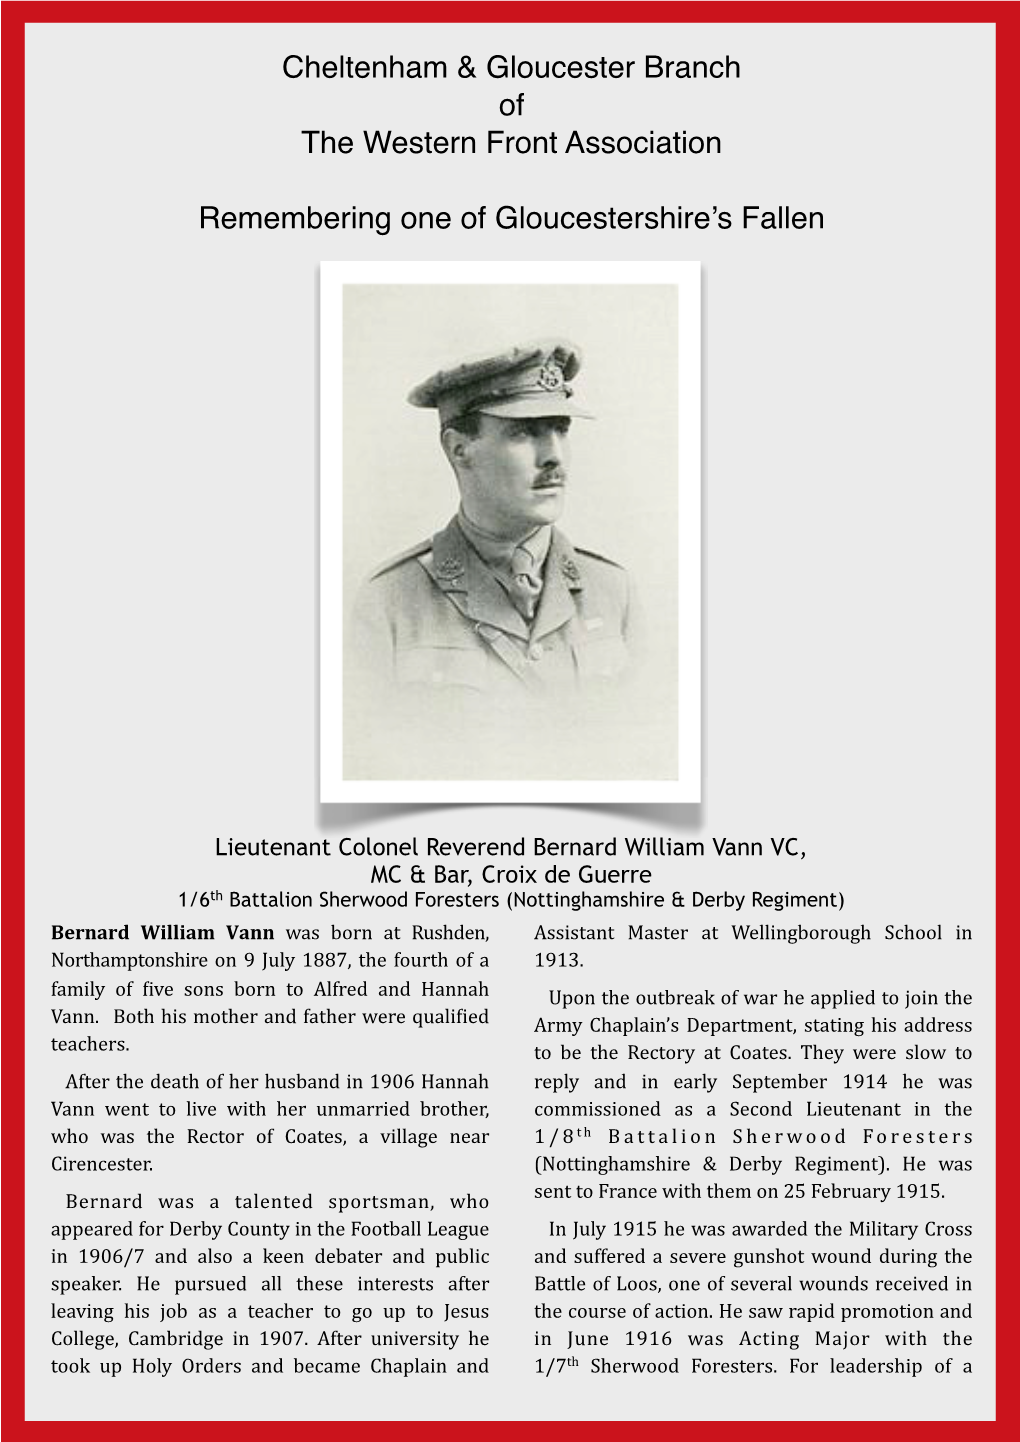 Lt Col Reverend Bernard William VANN VC, MC & Bar, Croix De Guerre